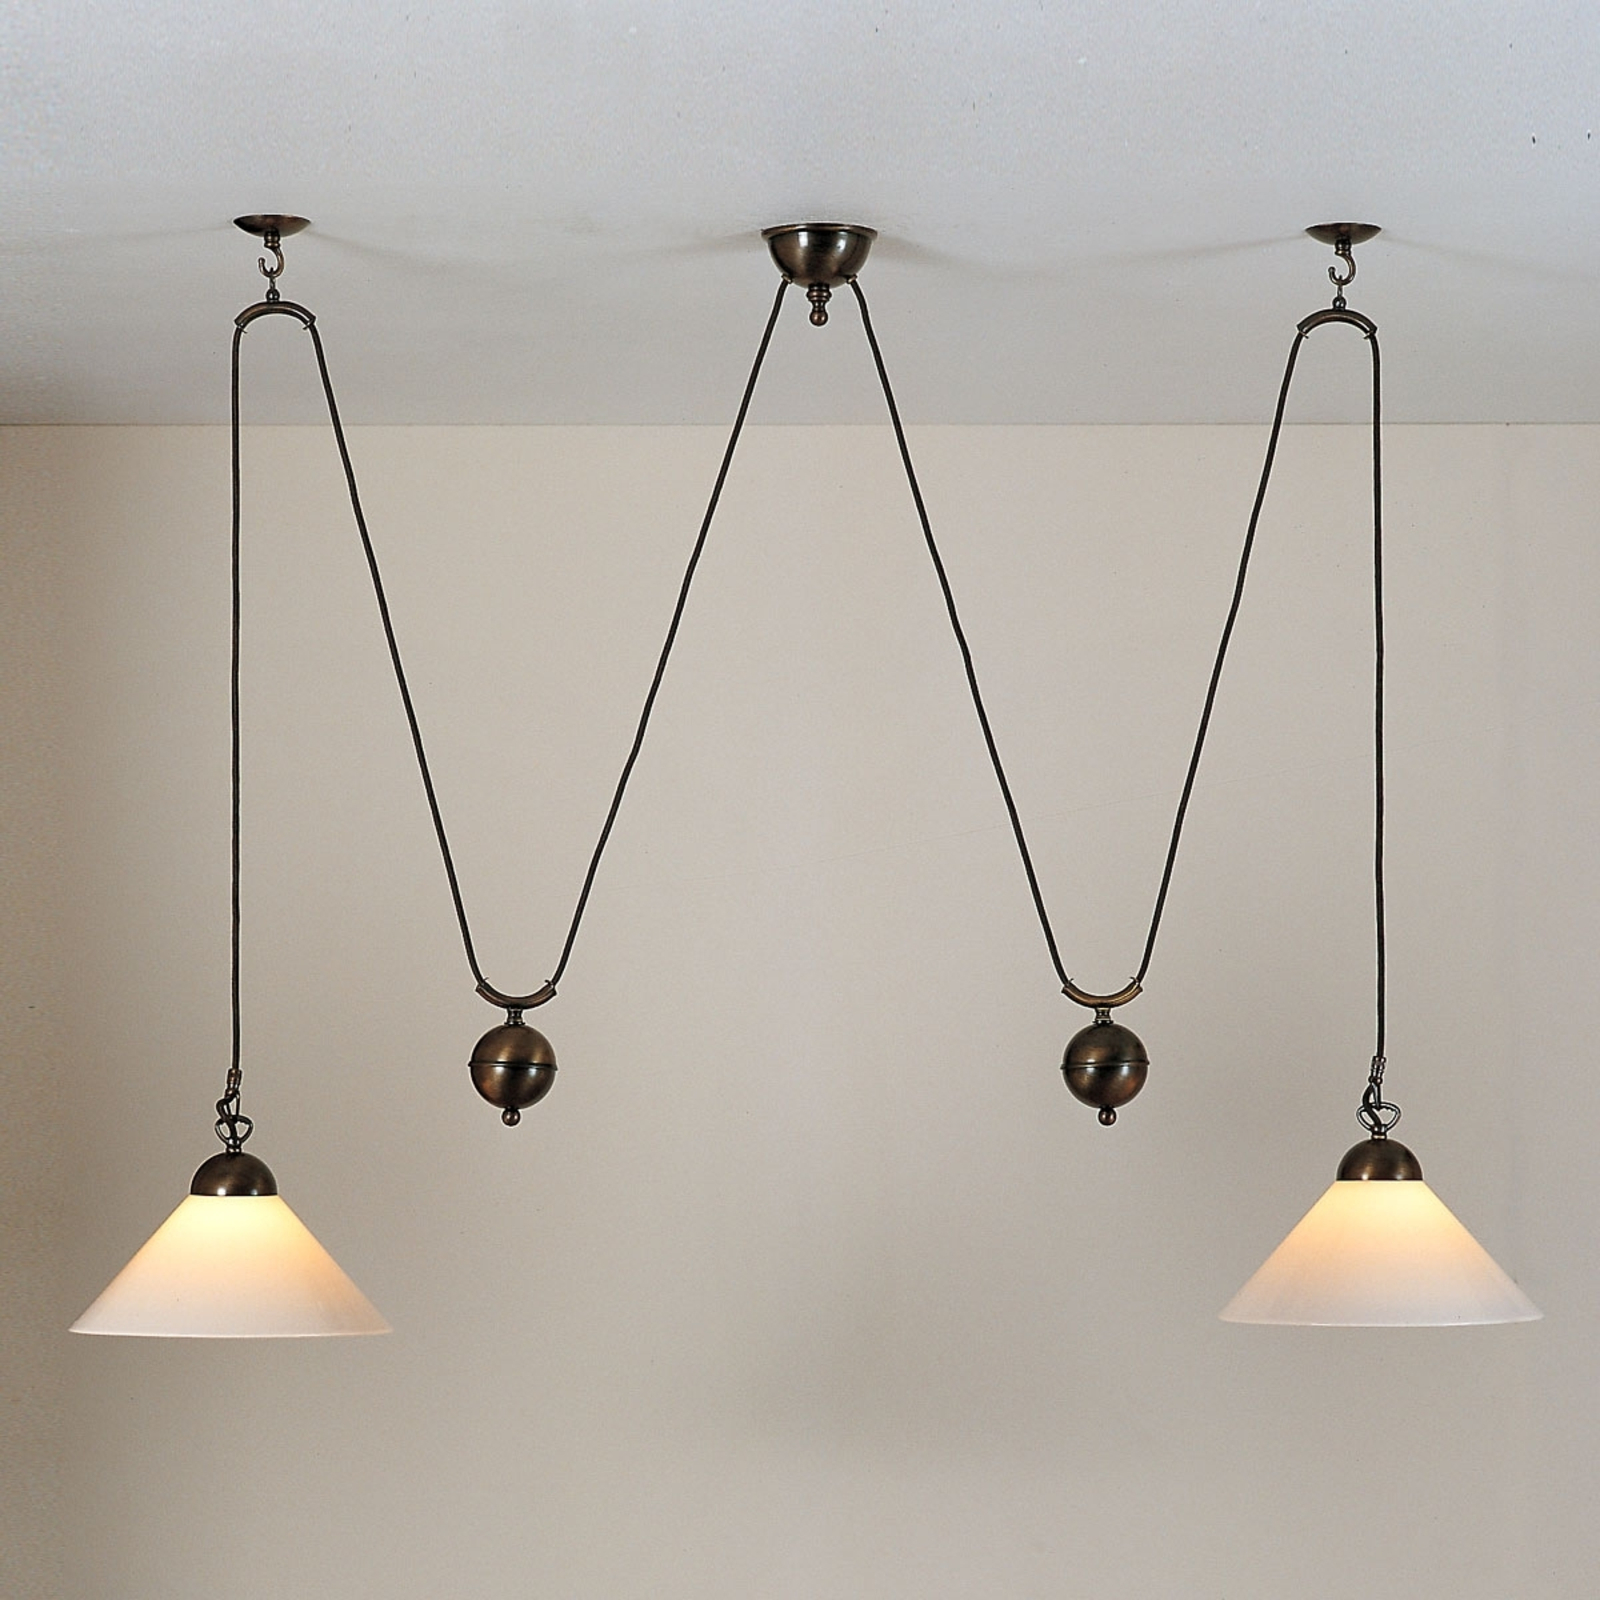 Flexibele hanglamp | Lampen24.nl